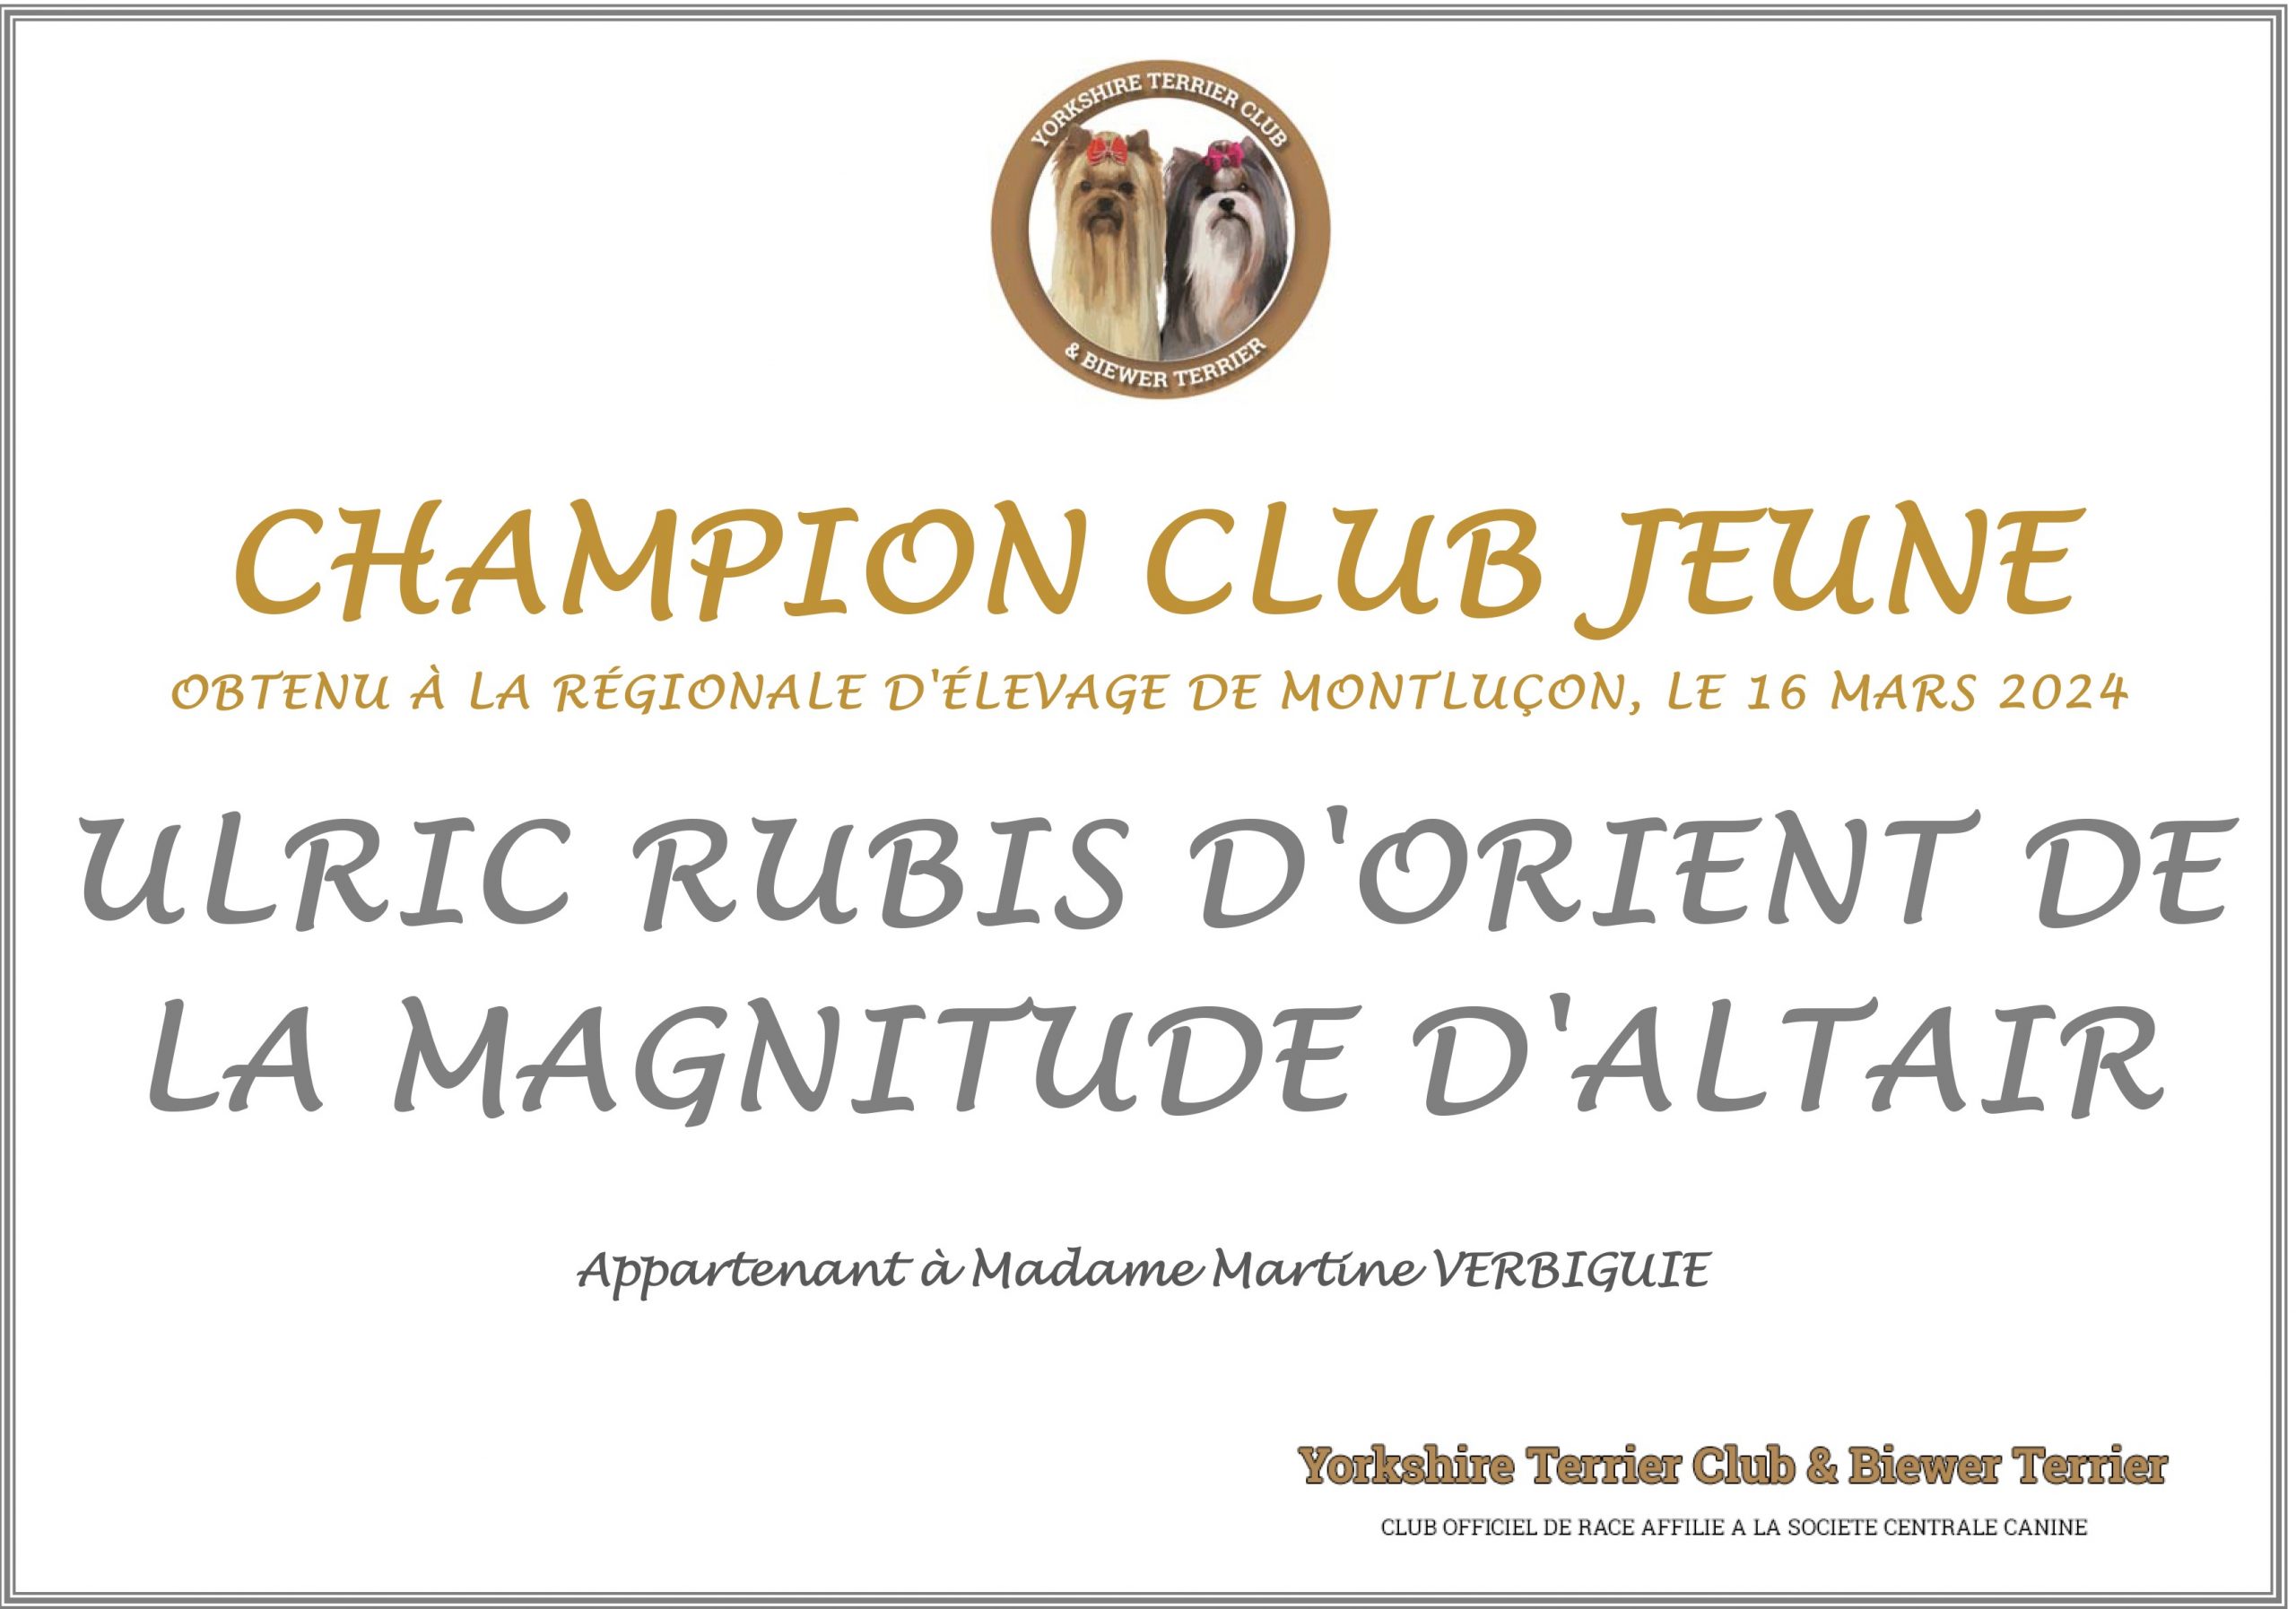 Microsoft Word - DIPLOME champion club JEUNE ULRIC RUBIS.docx